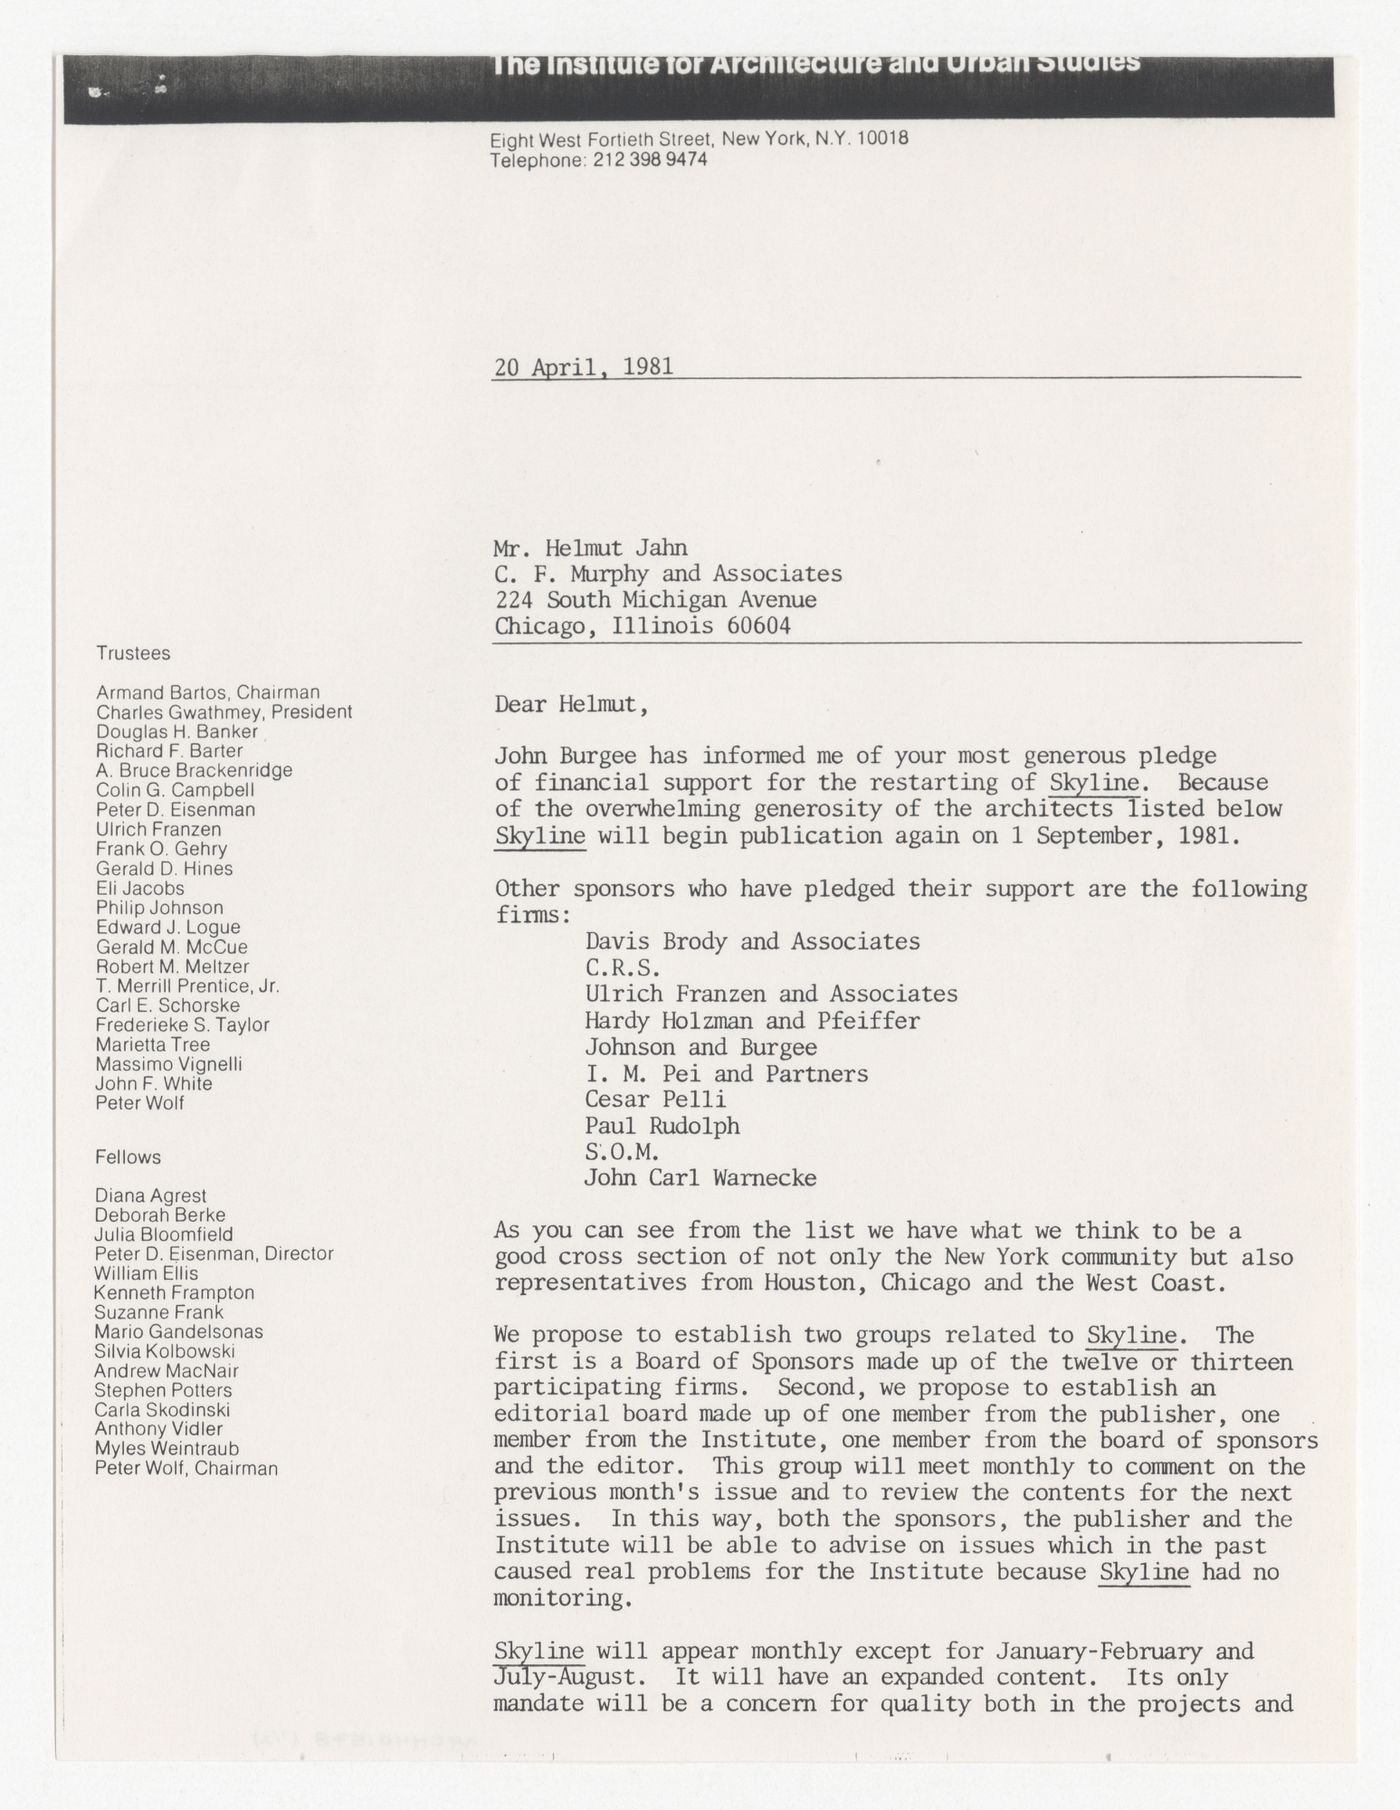 Letter from Peter D. Eisenman to Helmut Jahn about sponsorship for Skyline